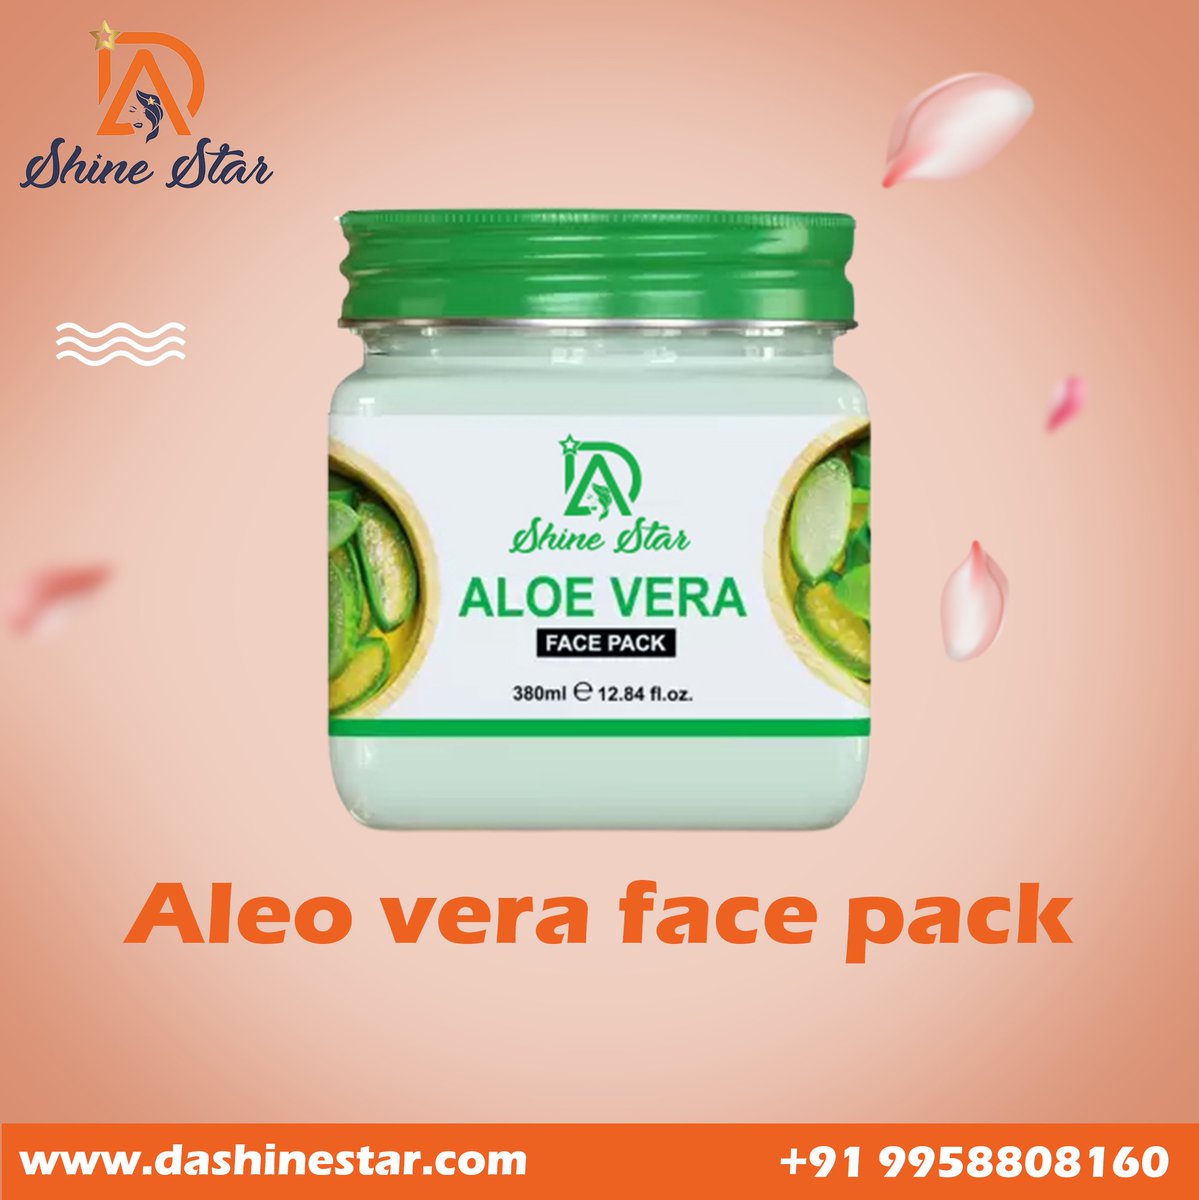 Shinestar Aleo vera face pack
.
.
#shinestar #beauty #beautyproducts #faceproducts #aleovera #aleoveraproducts #badycare #like #followers #comment #facial #postoftheday #skinecare #Twitter